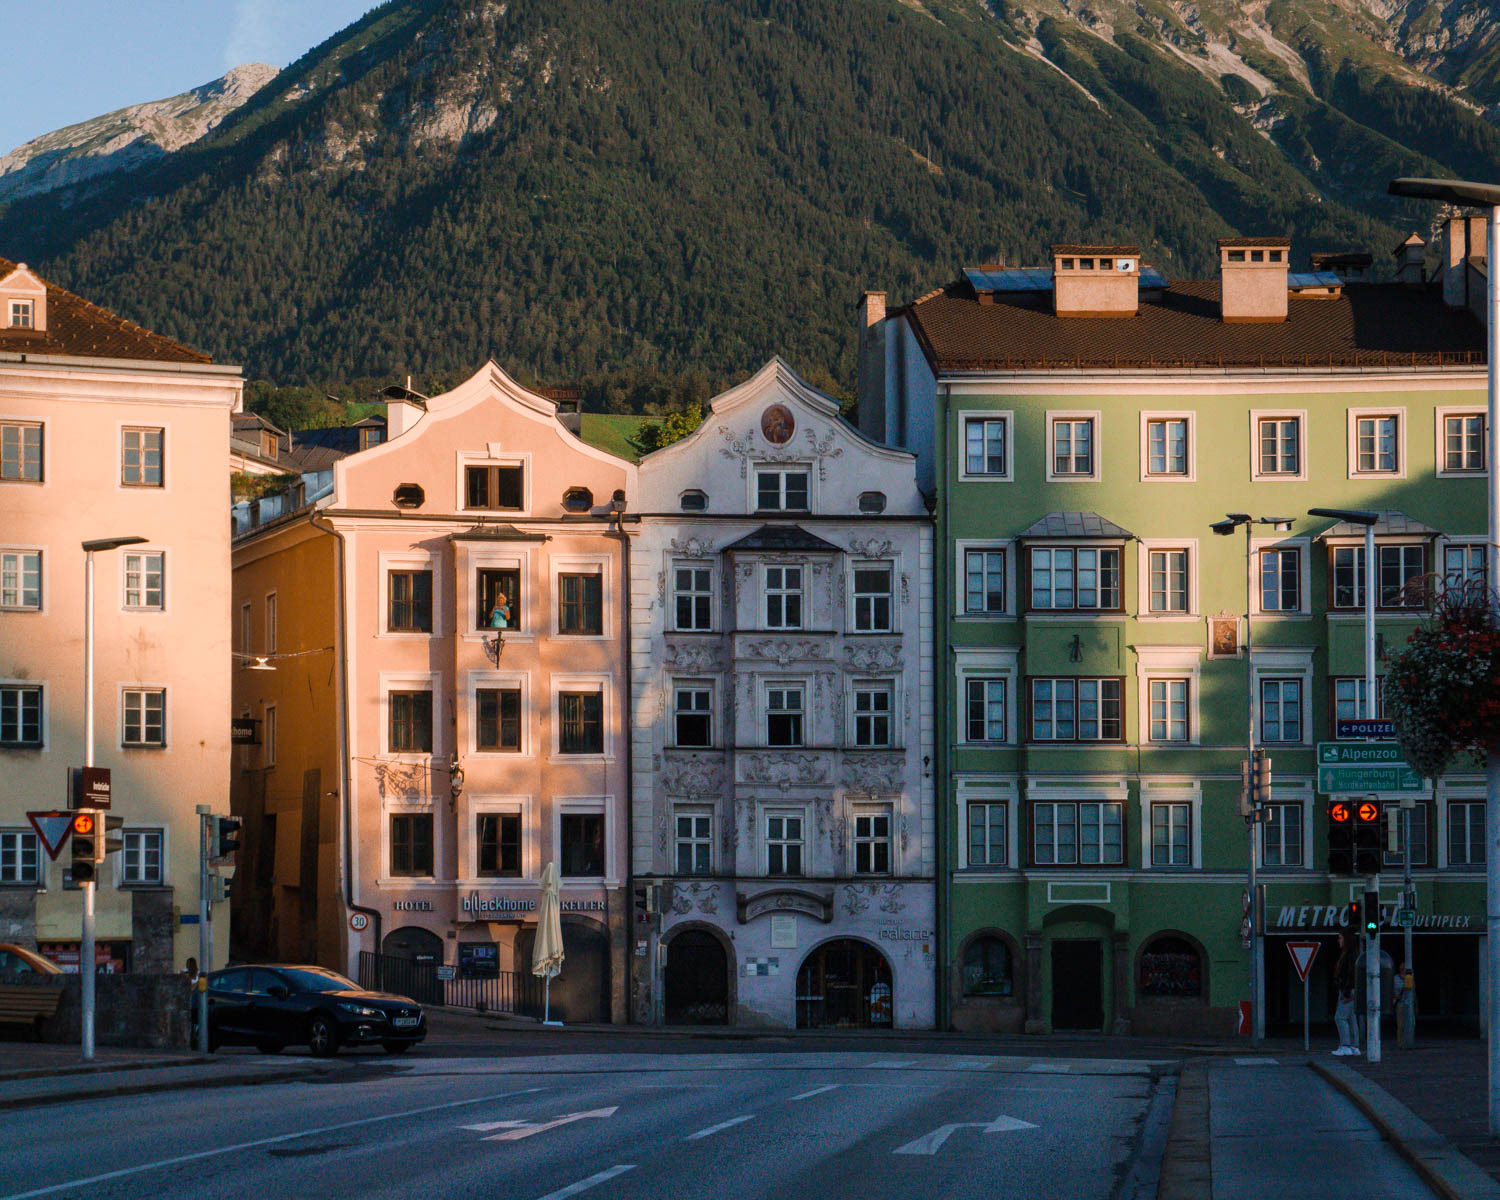 3 days in Innsbruck